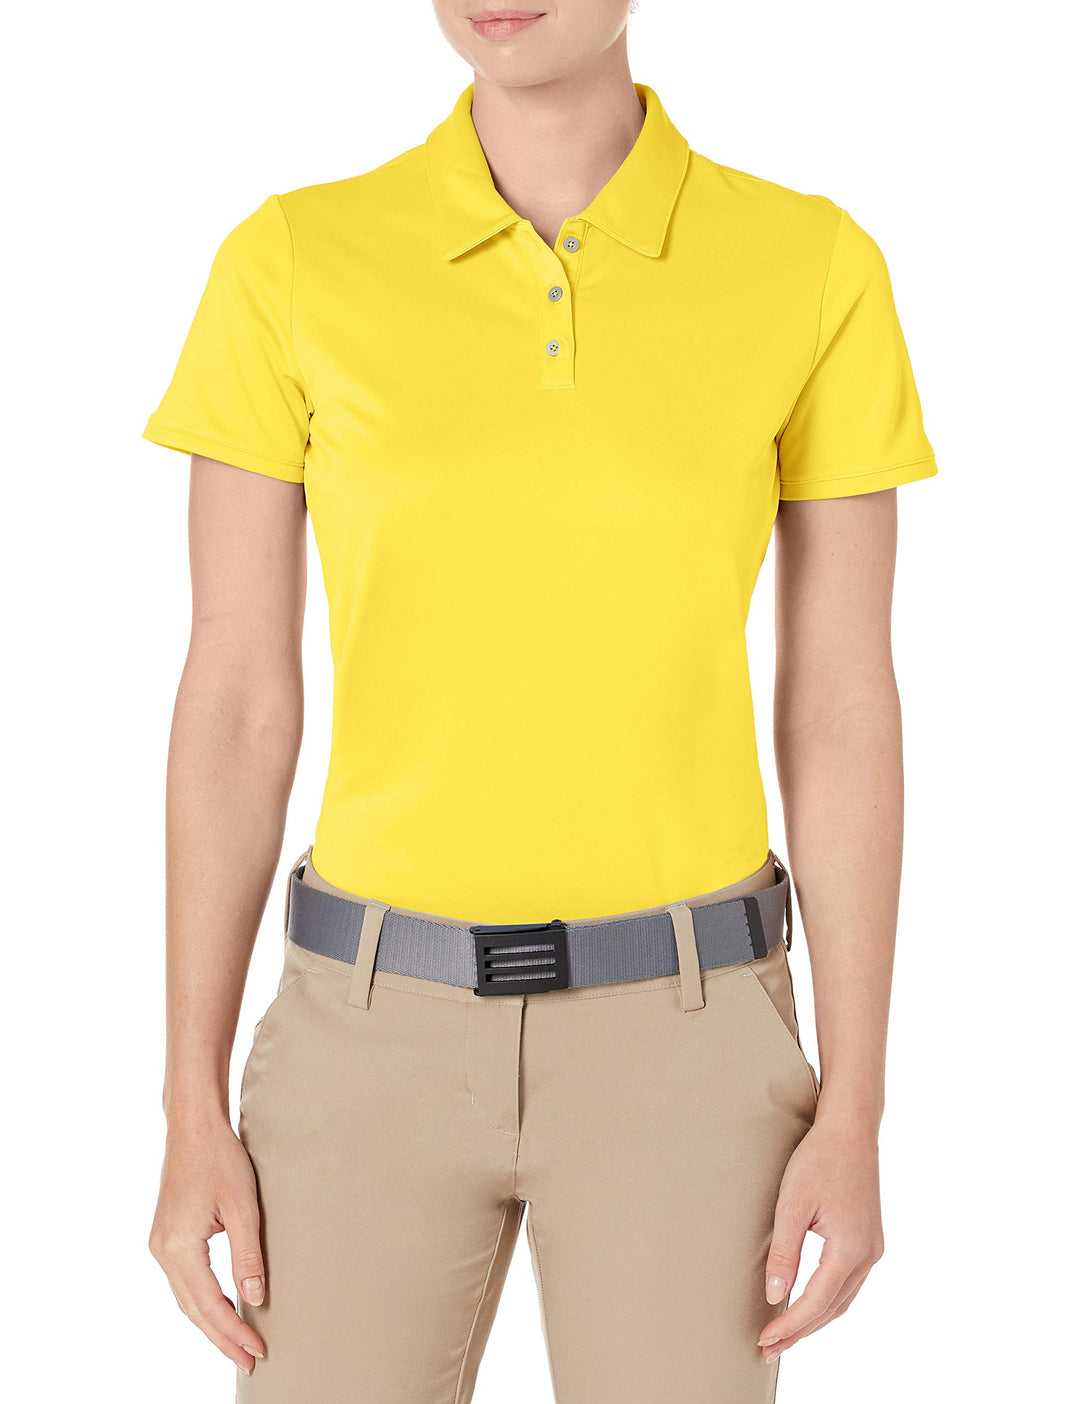 adidas Golf Tournament Short Sleeve Polo, Bright Yellow, Small